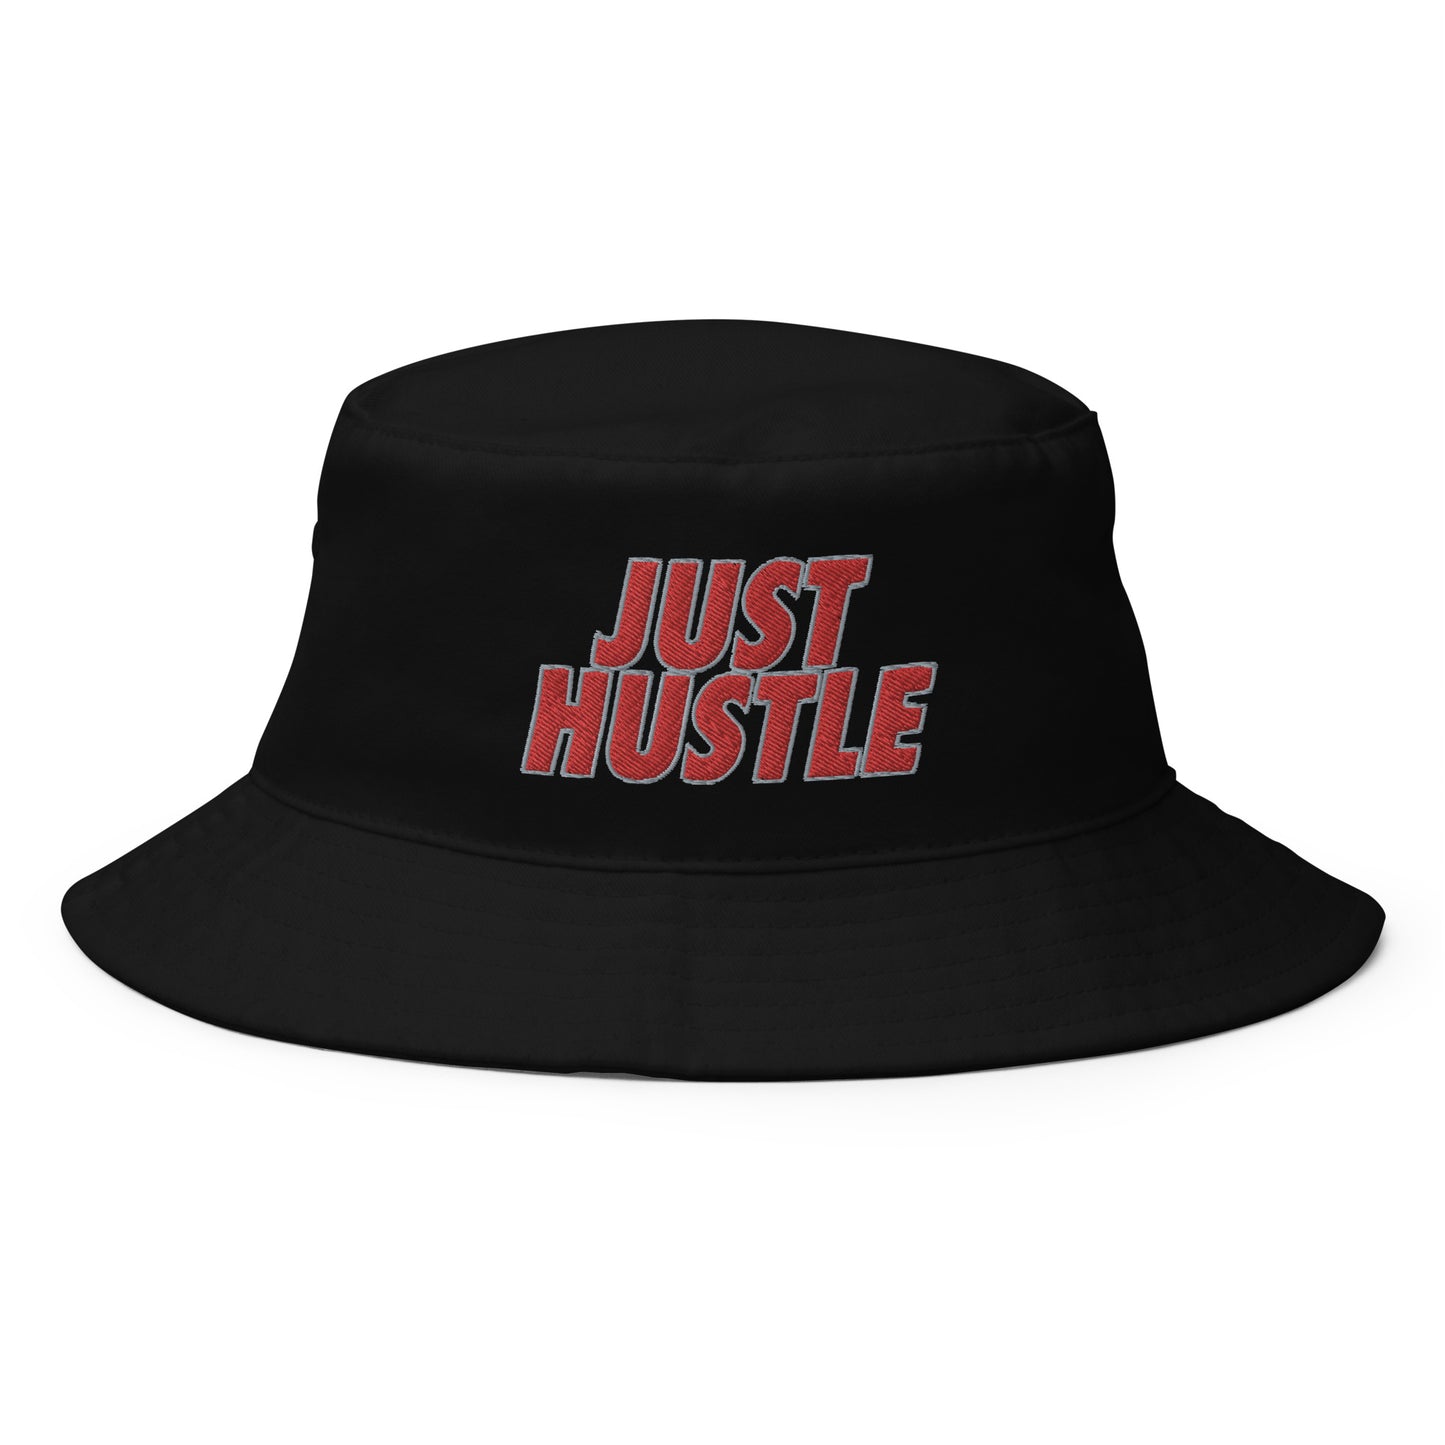 Just Hustle black Bucket Hat